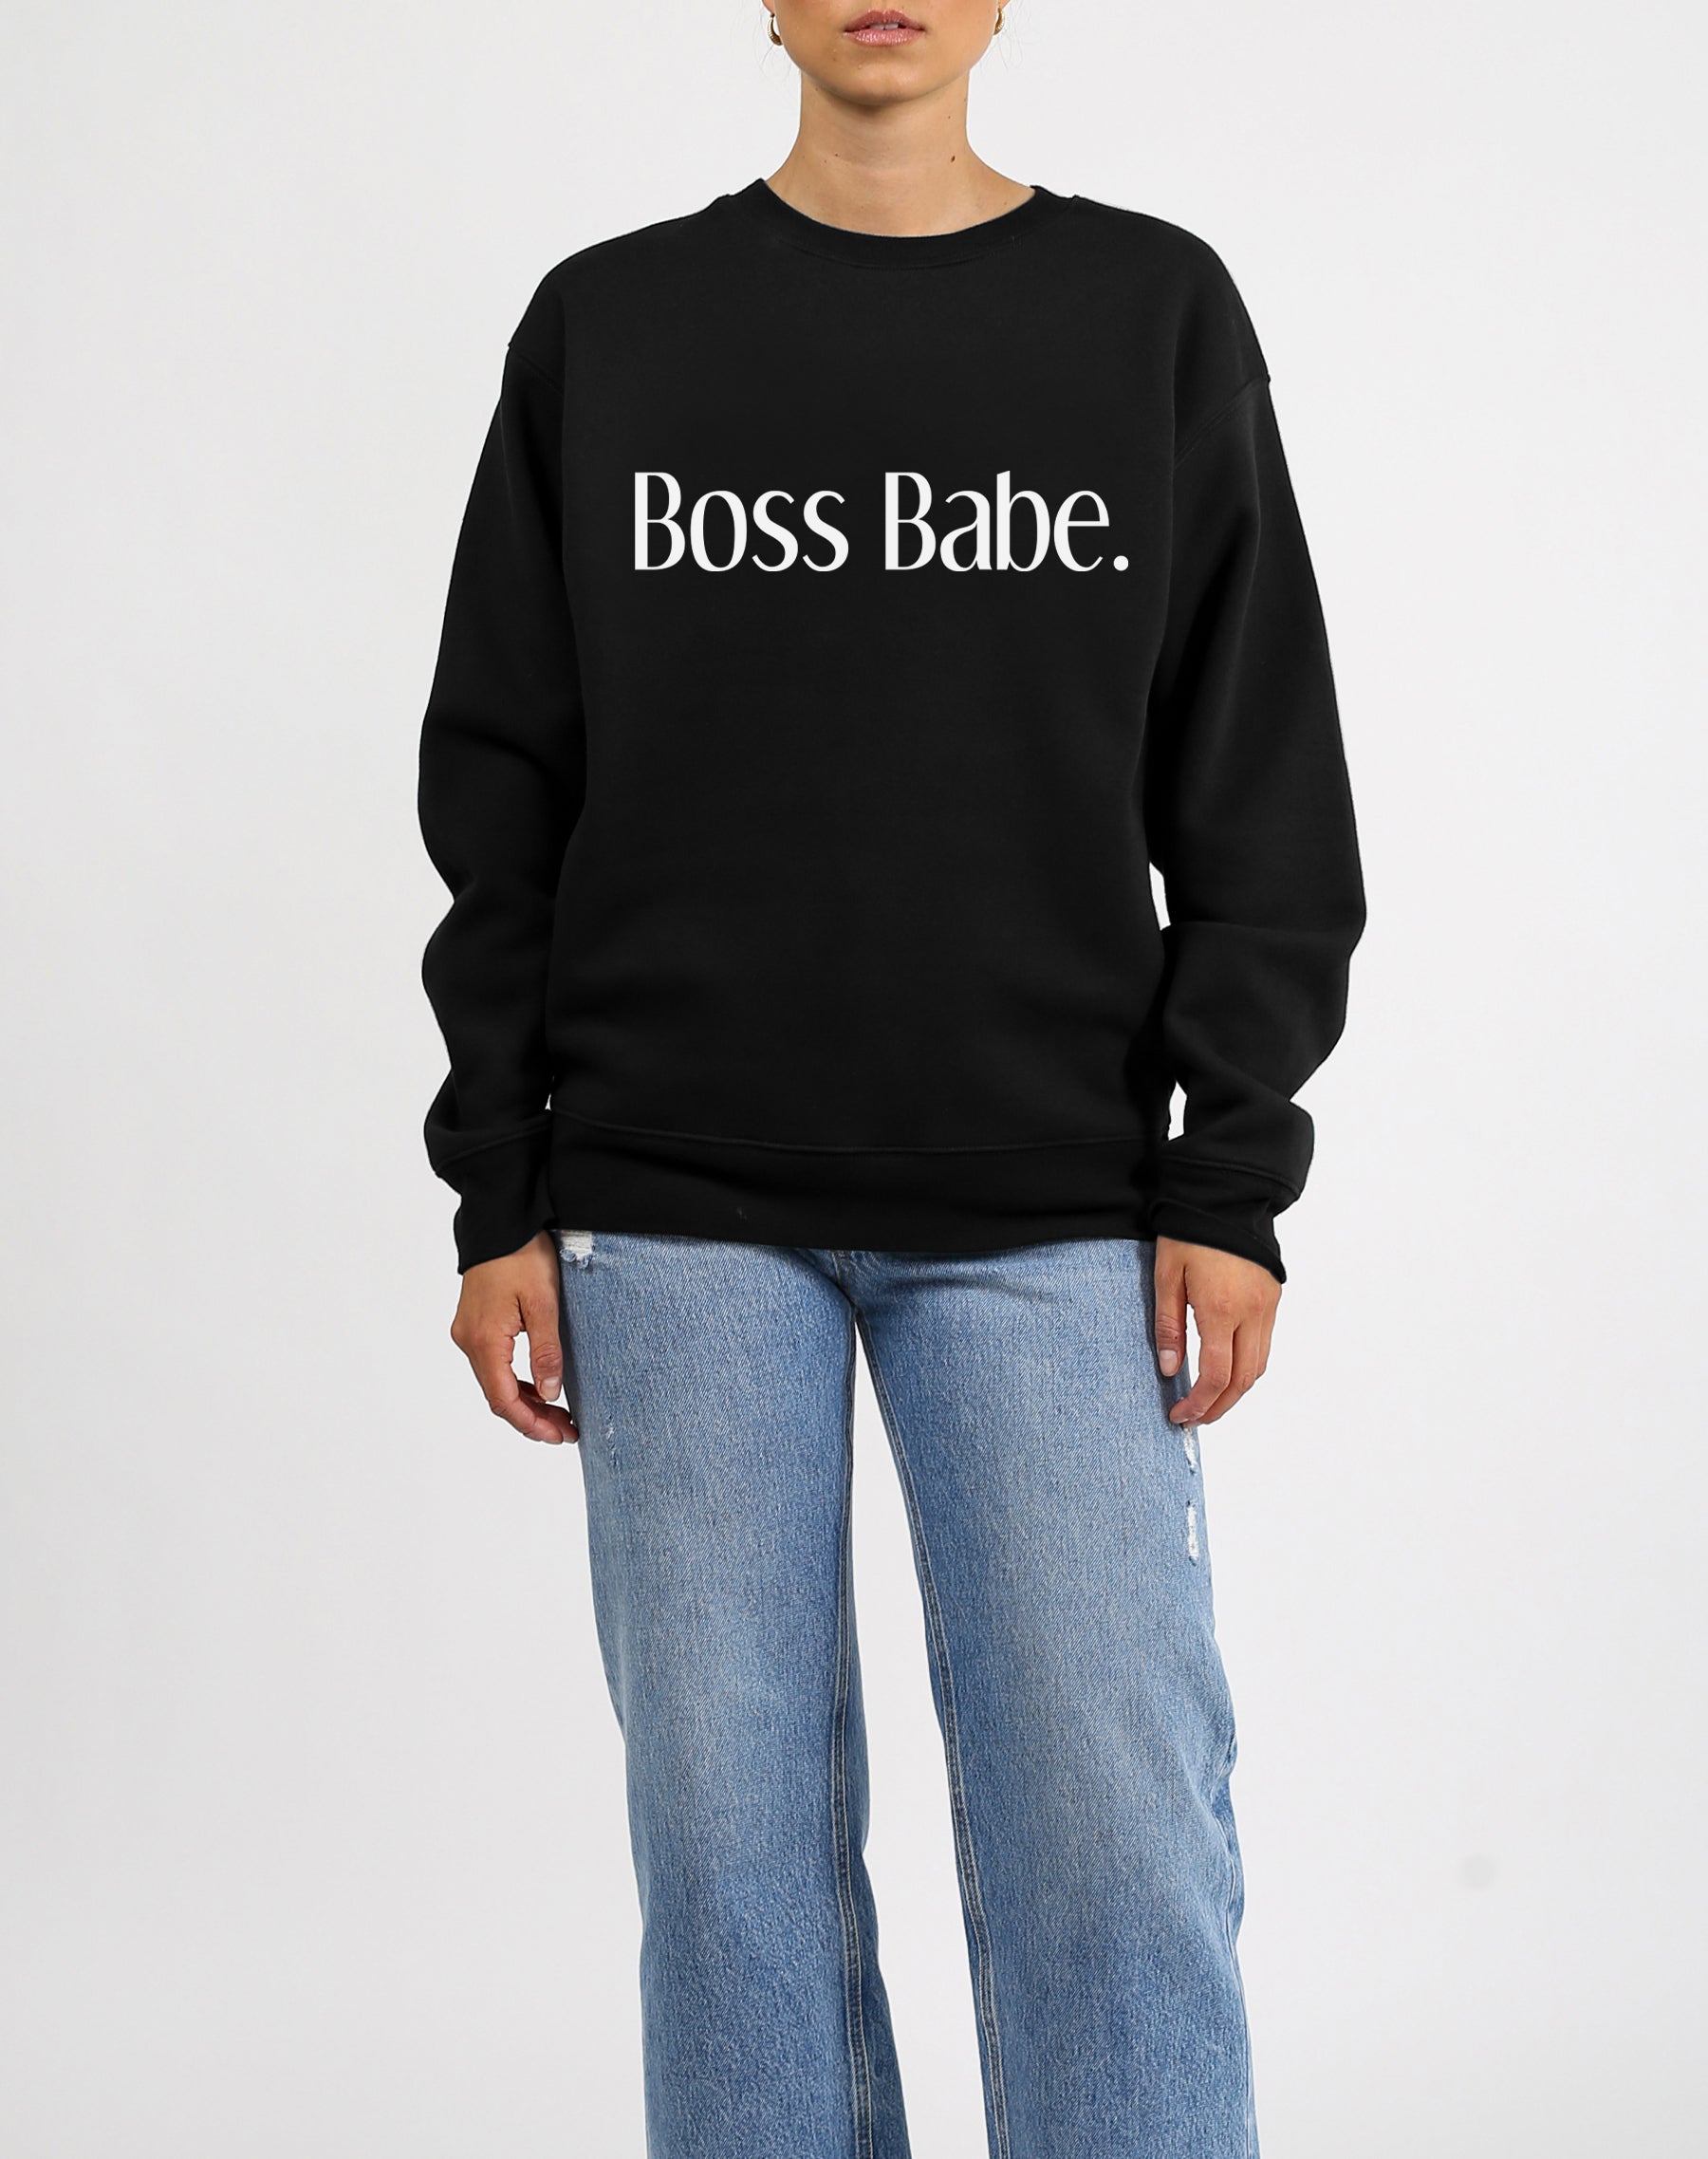 boss babe clothing